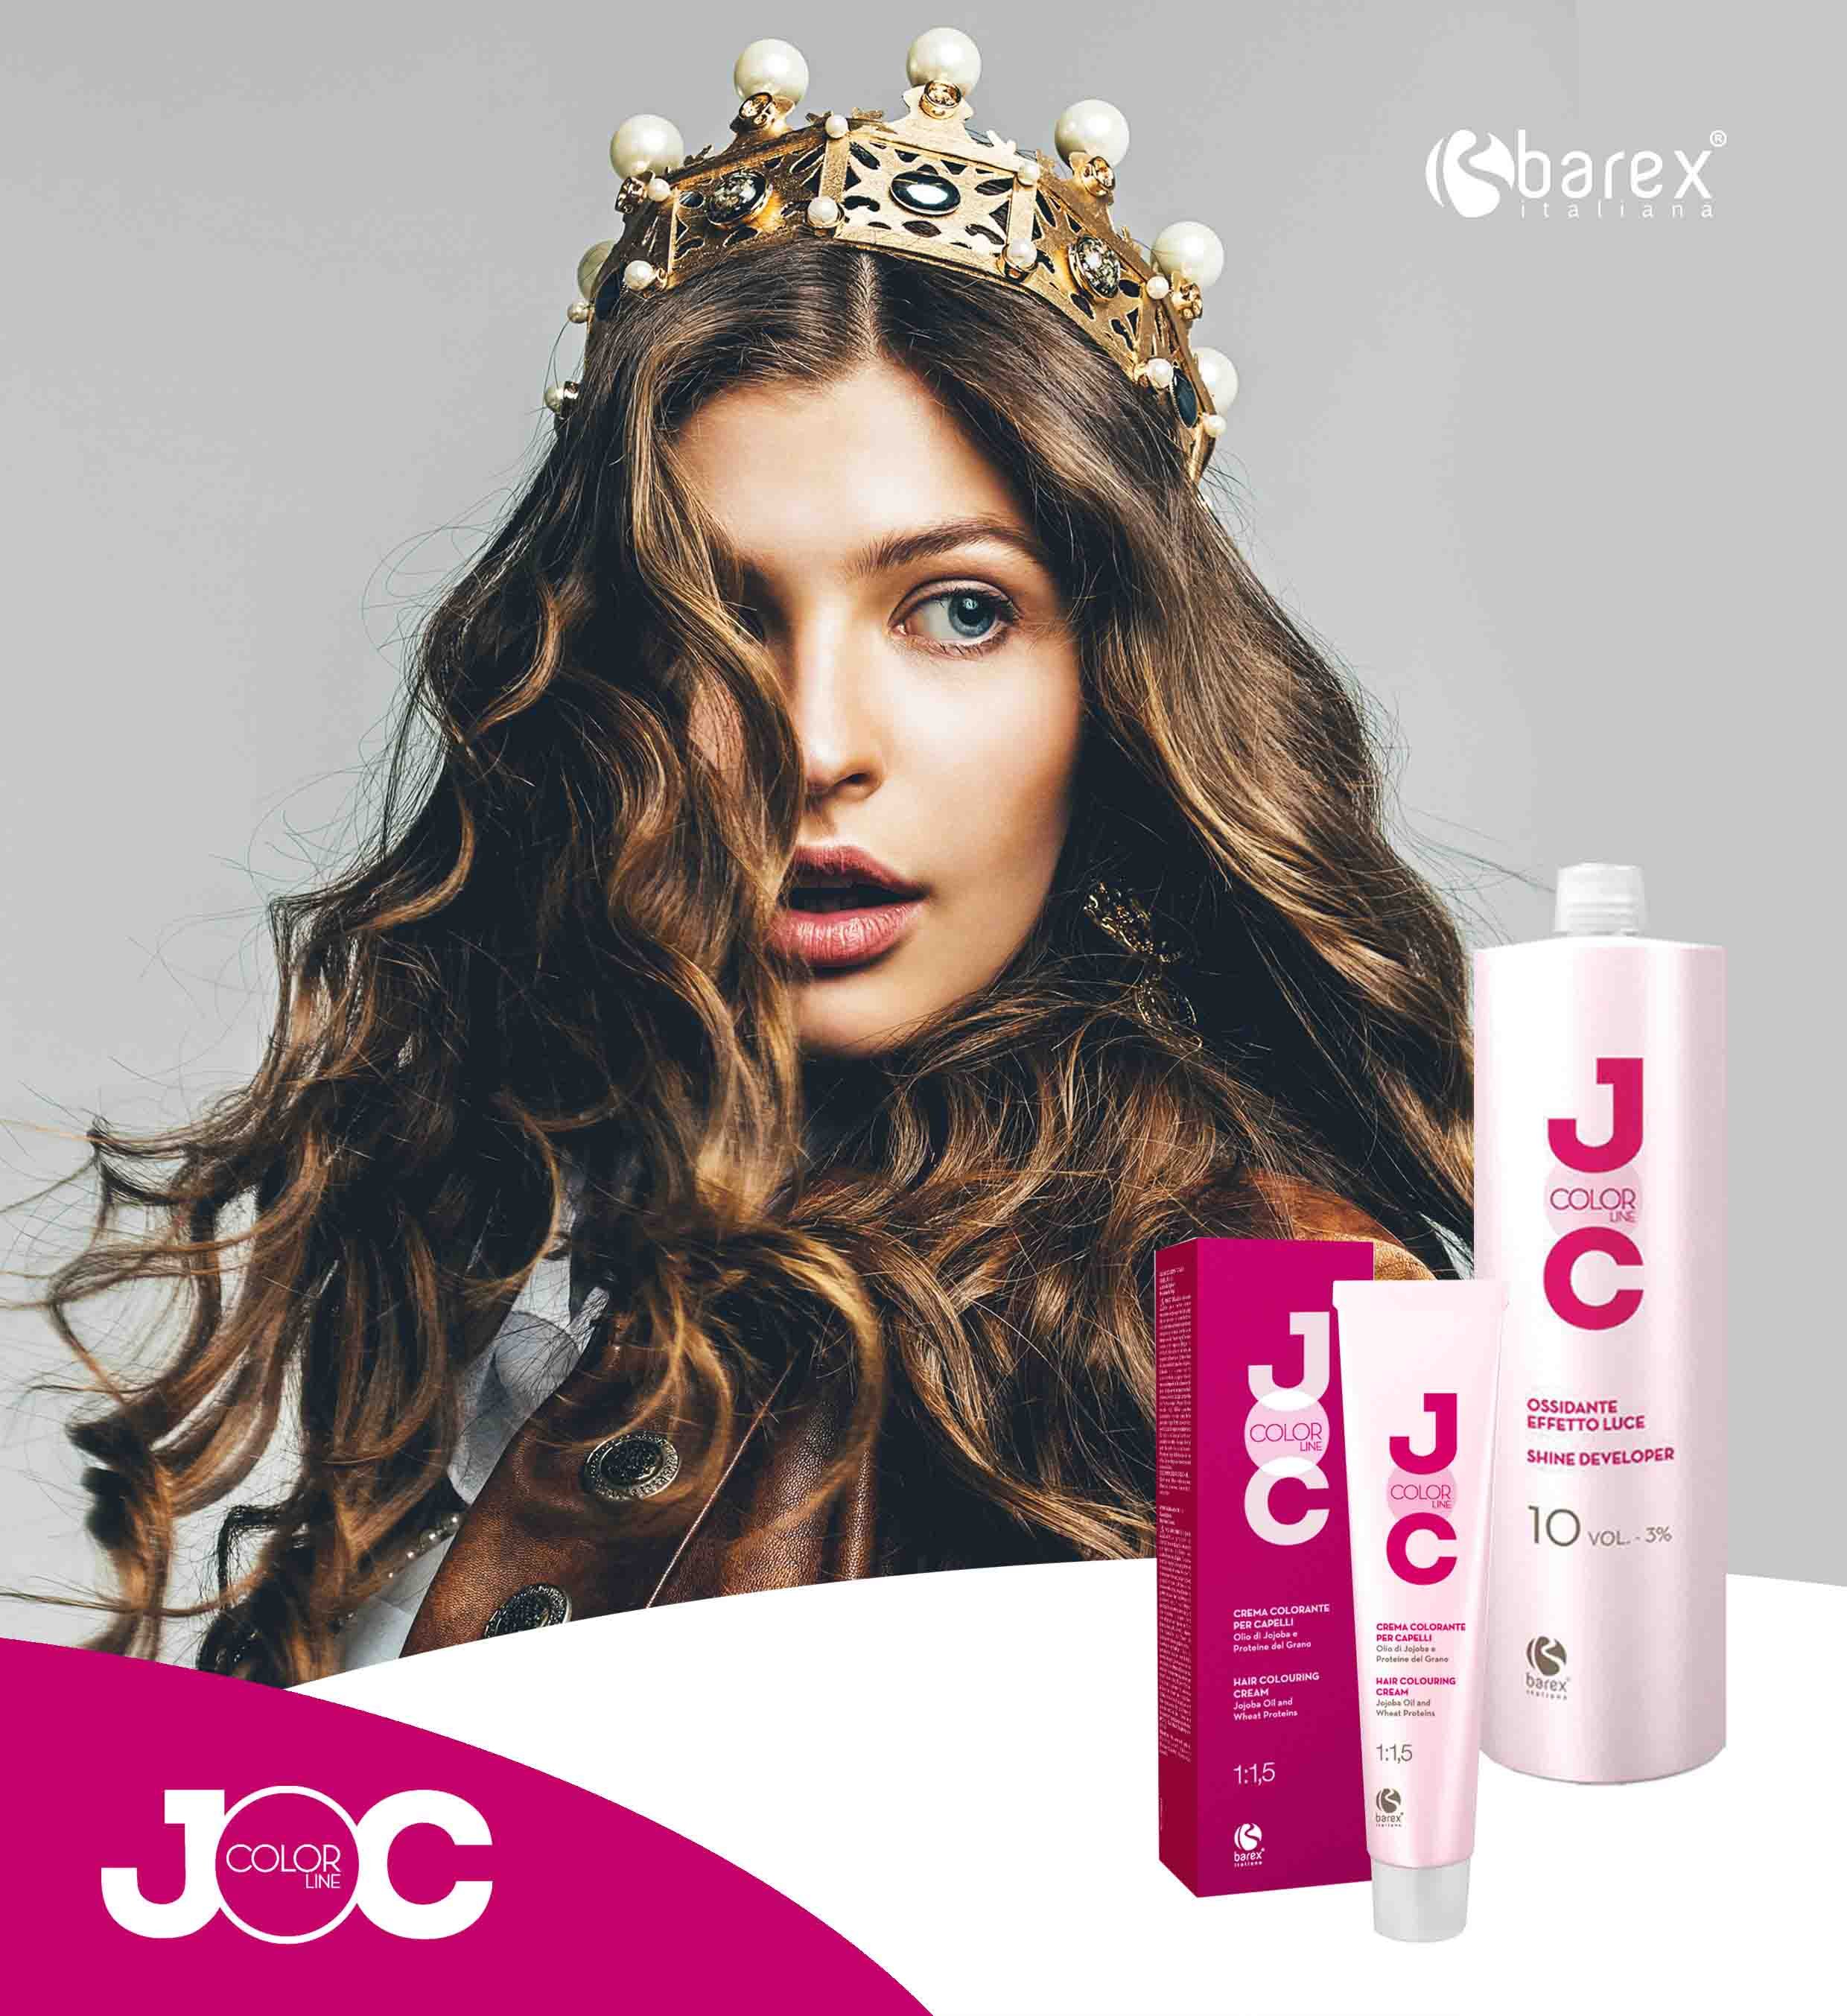 JOC Hair Color Barex Italiana